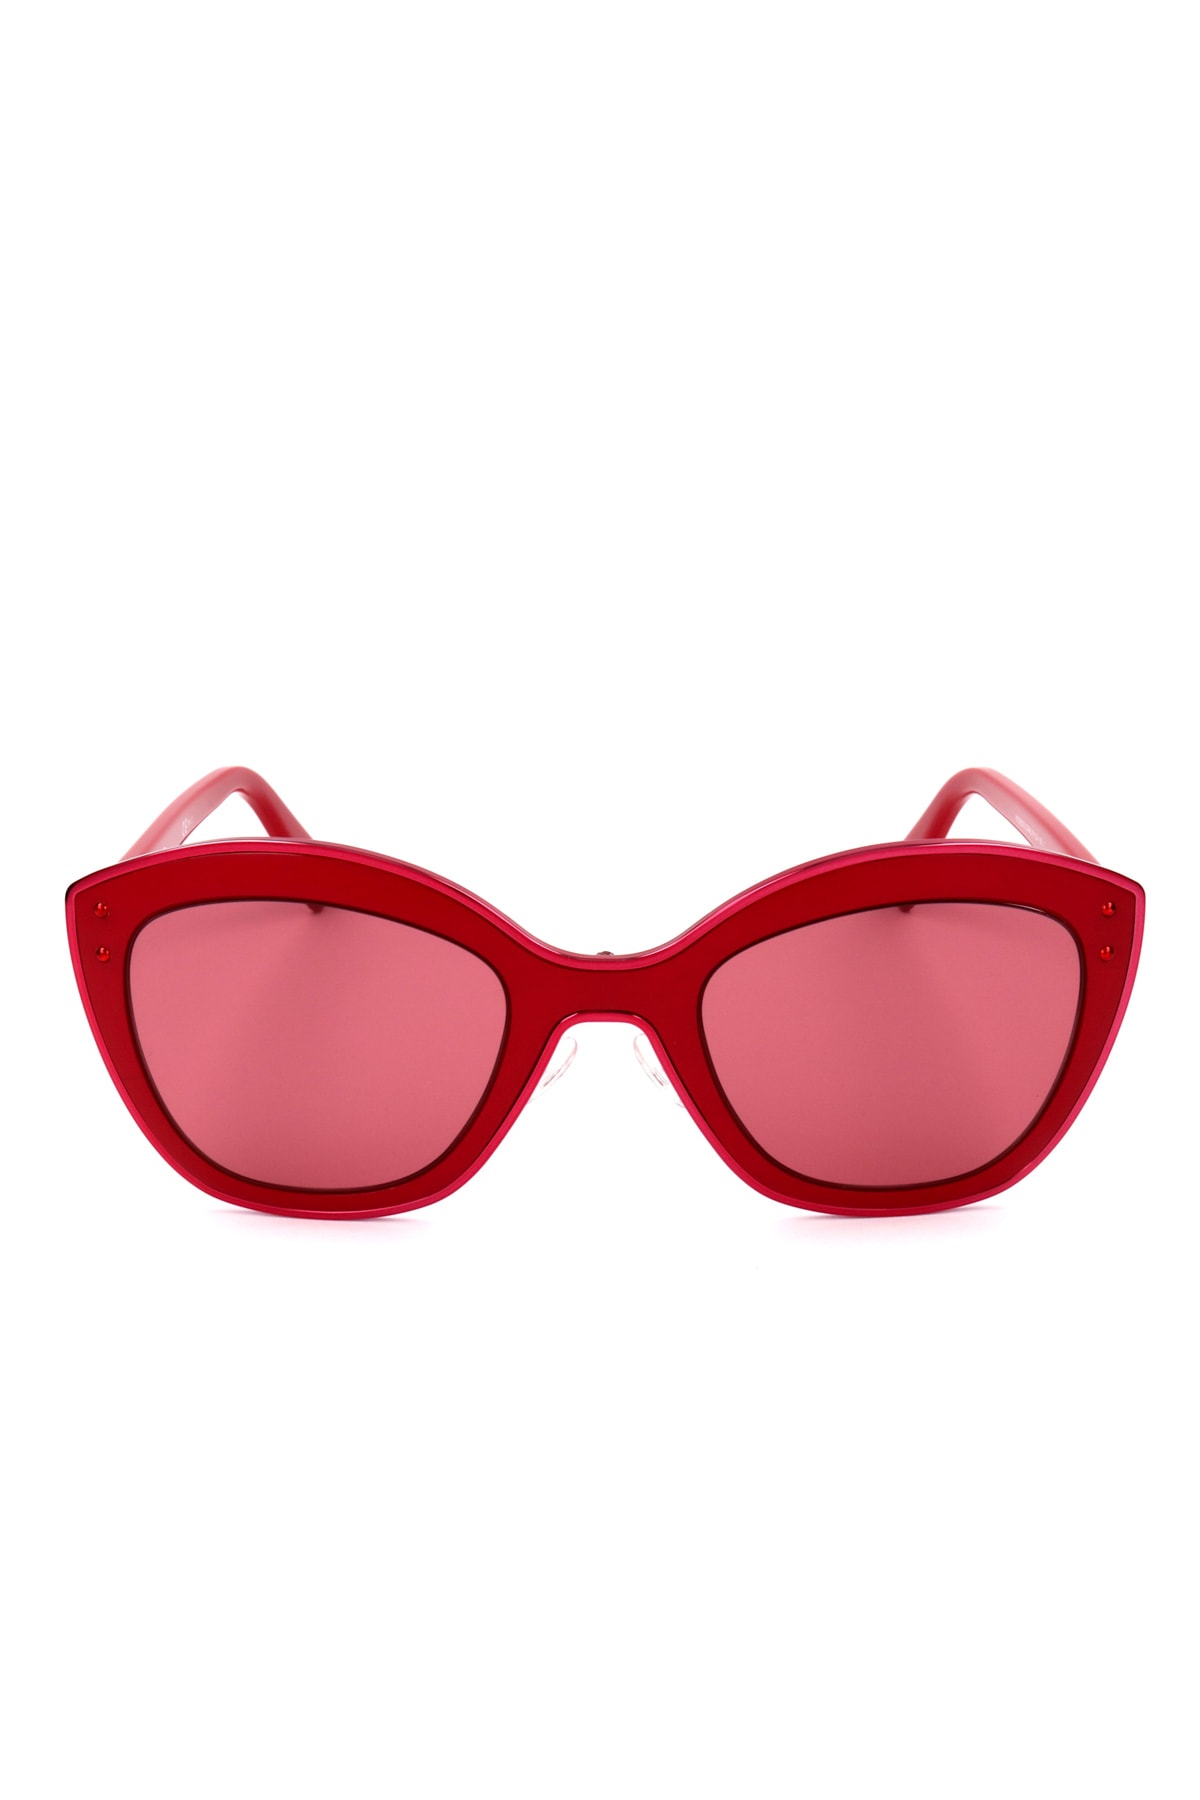 Moschino Sonnenbrille Rot Schmetterling/Cat Eye